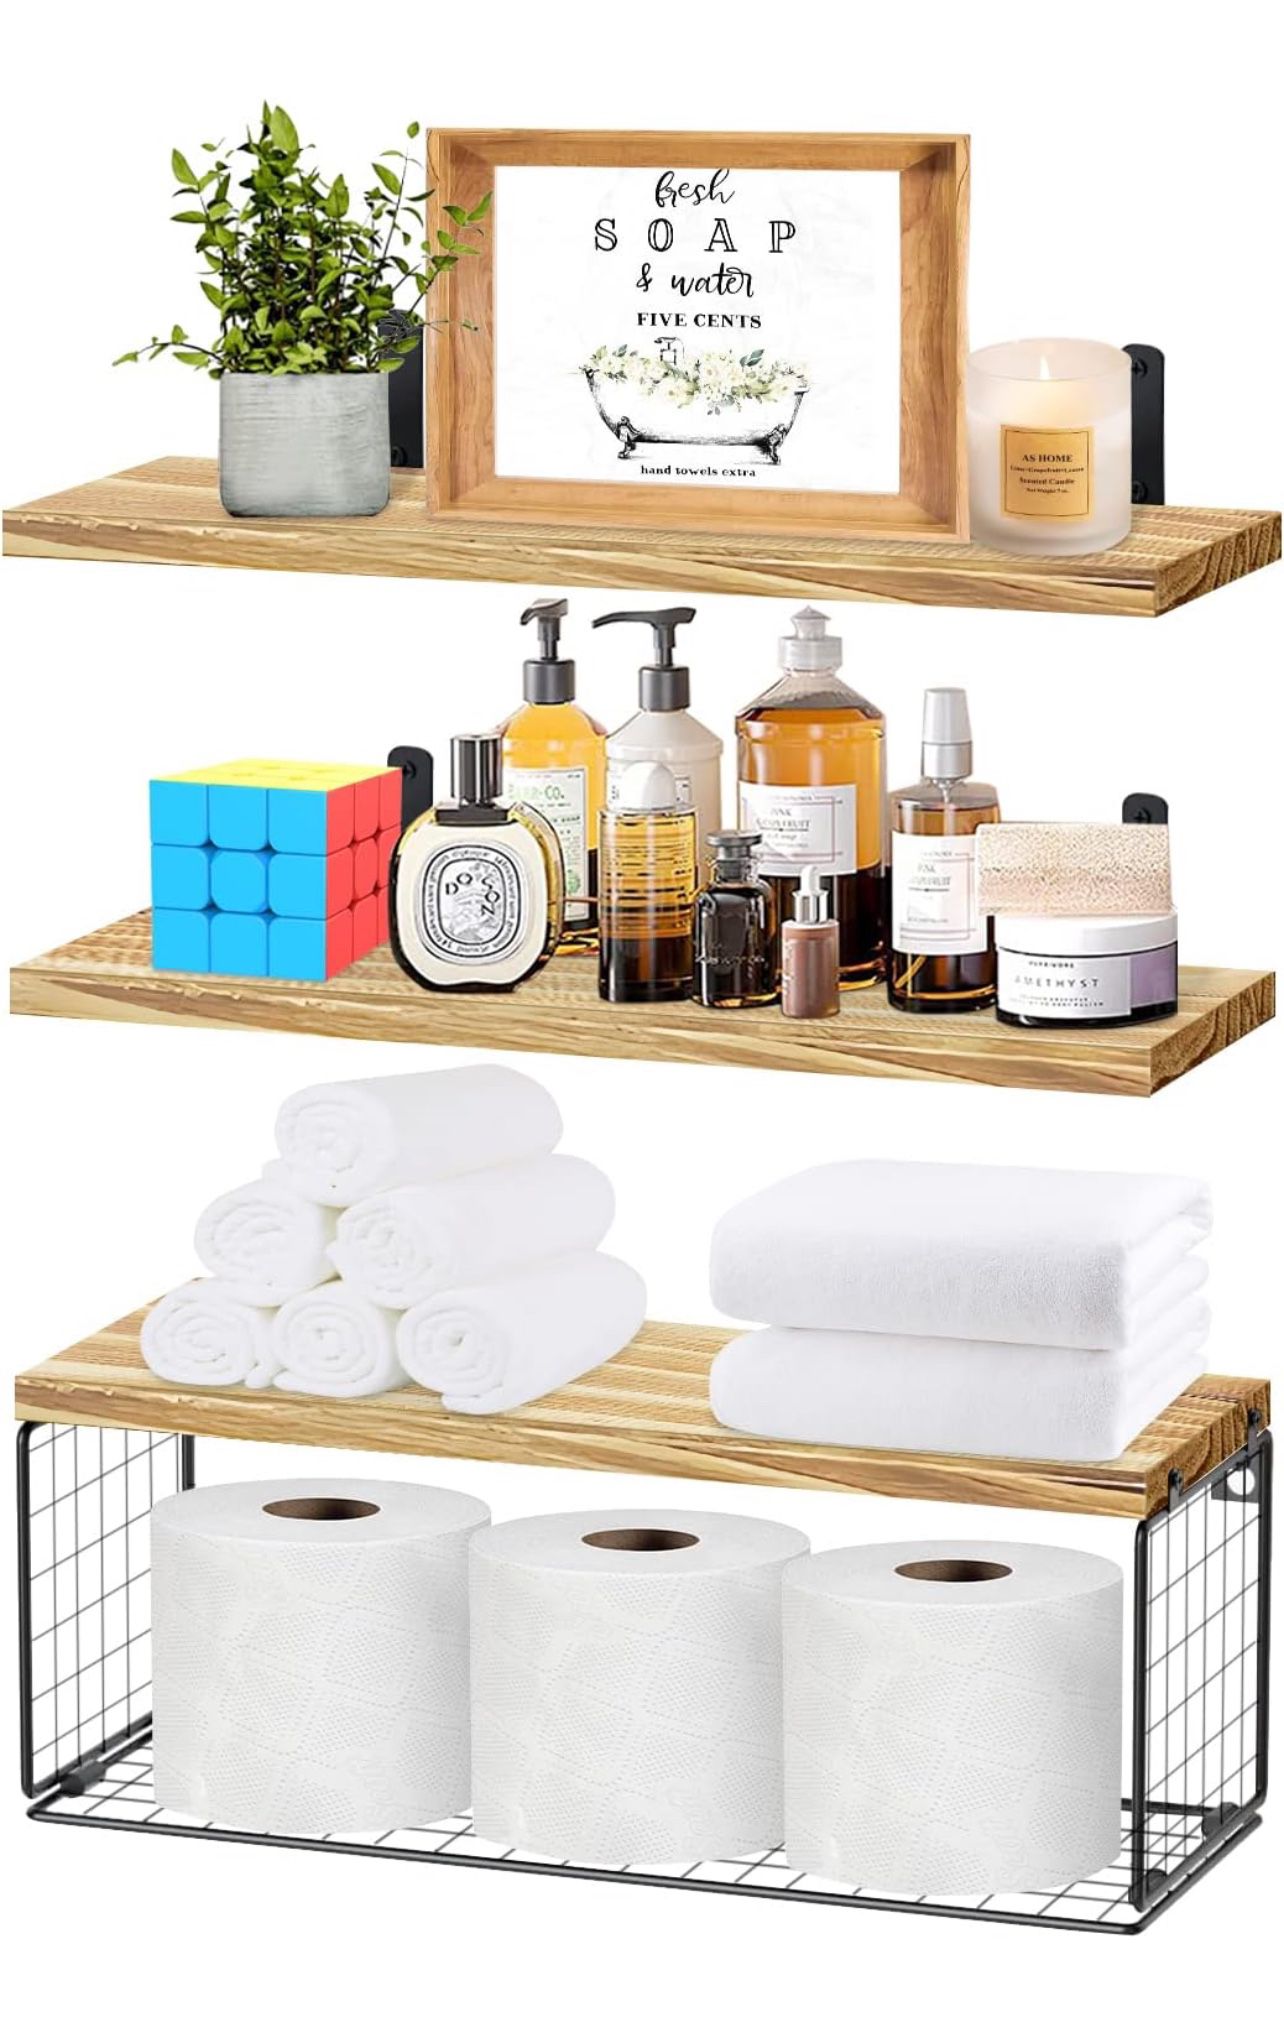 4/Shelves, Bathroom Shelves with Storage Basket, Wall